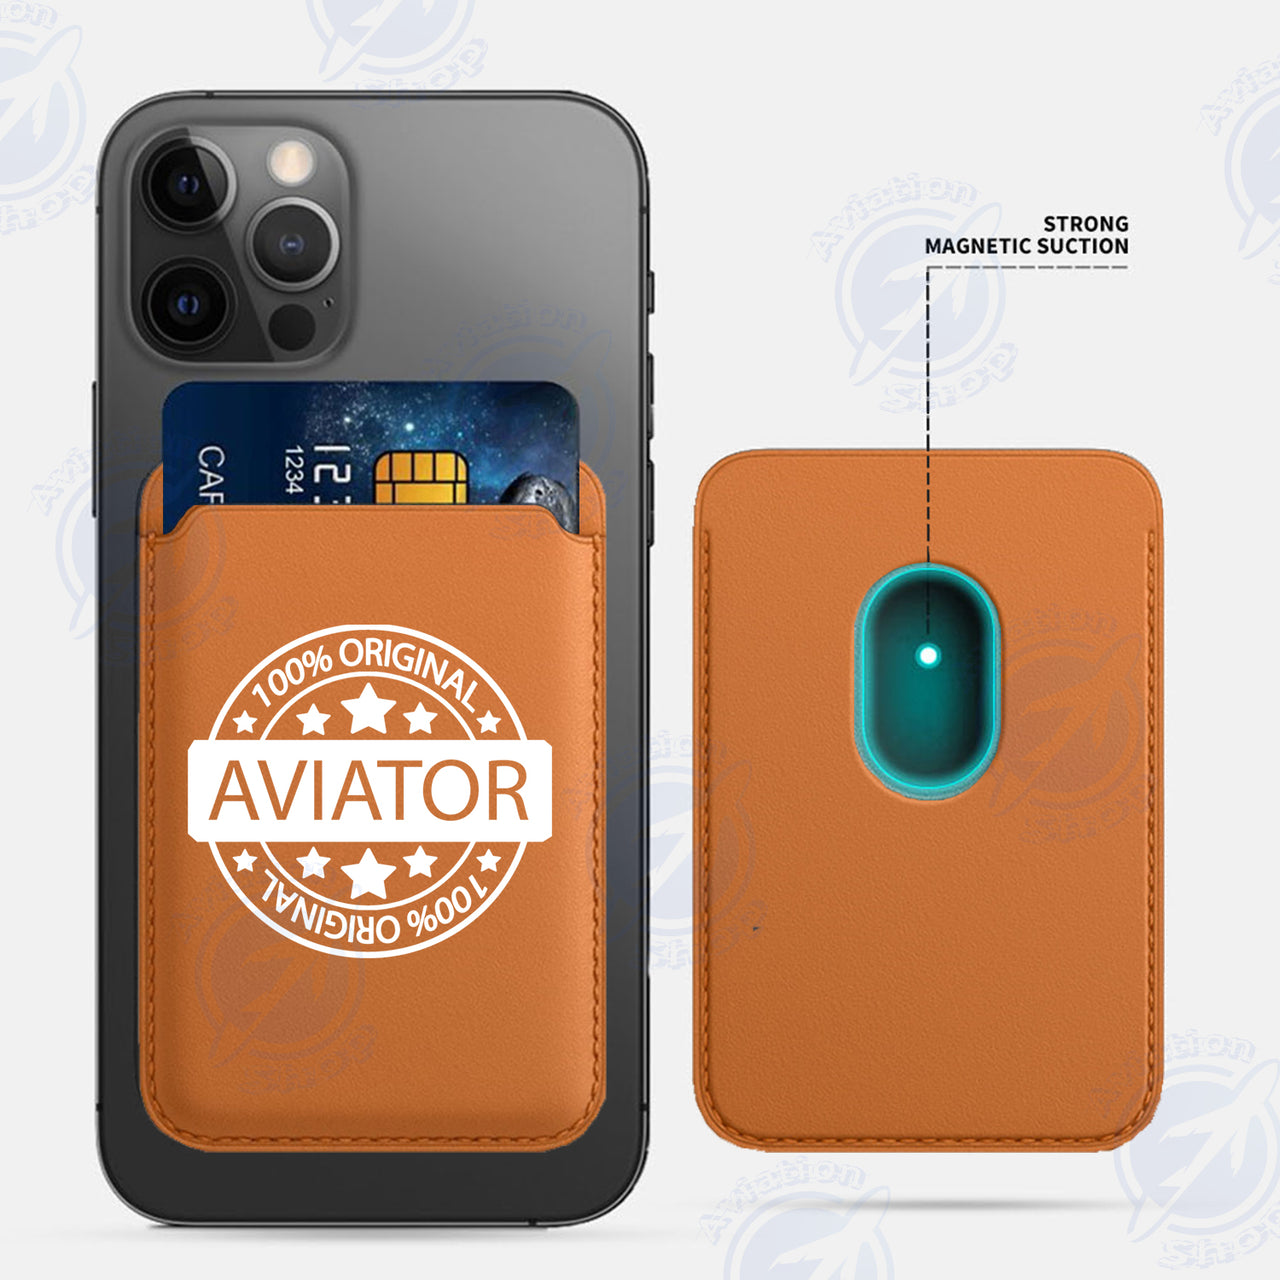 %100 Original Aviator iPhone Cases Magnetic Card Wallet